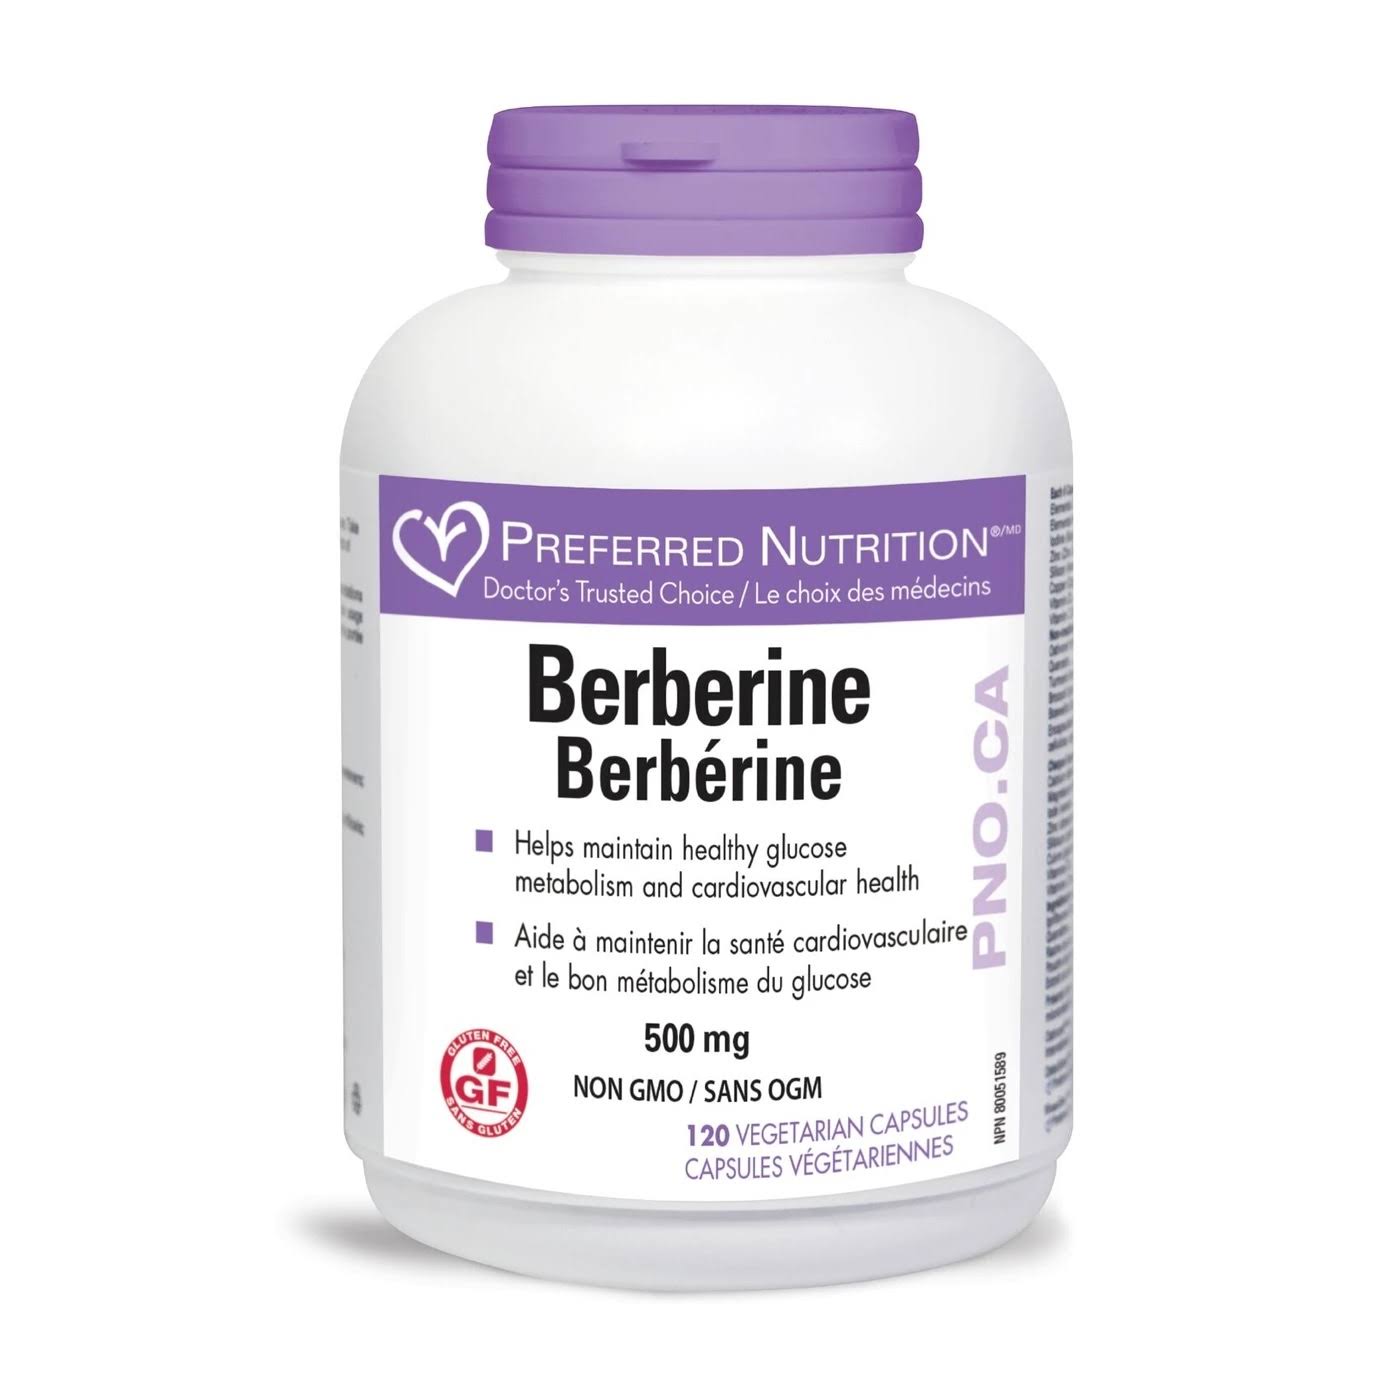 Preferred Nutrition Berberine Supplement - 500mg